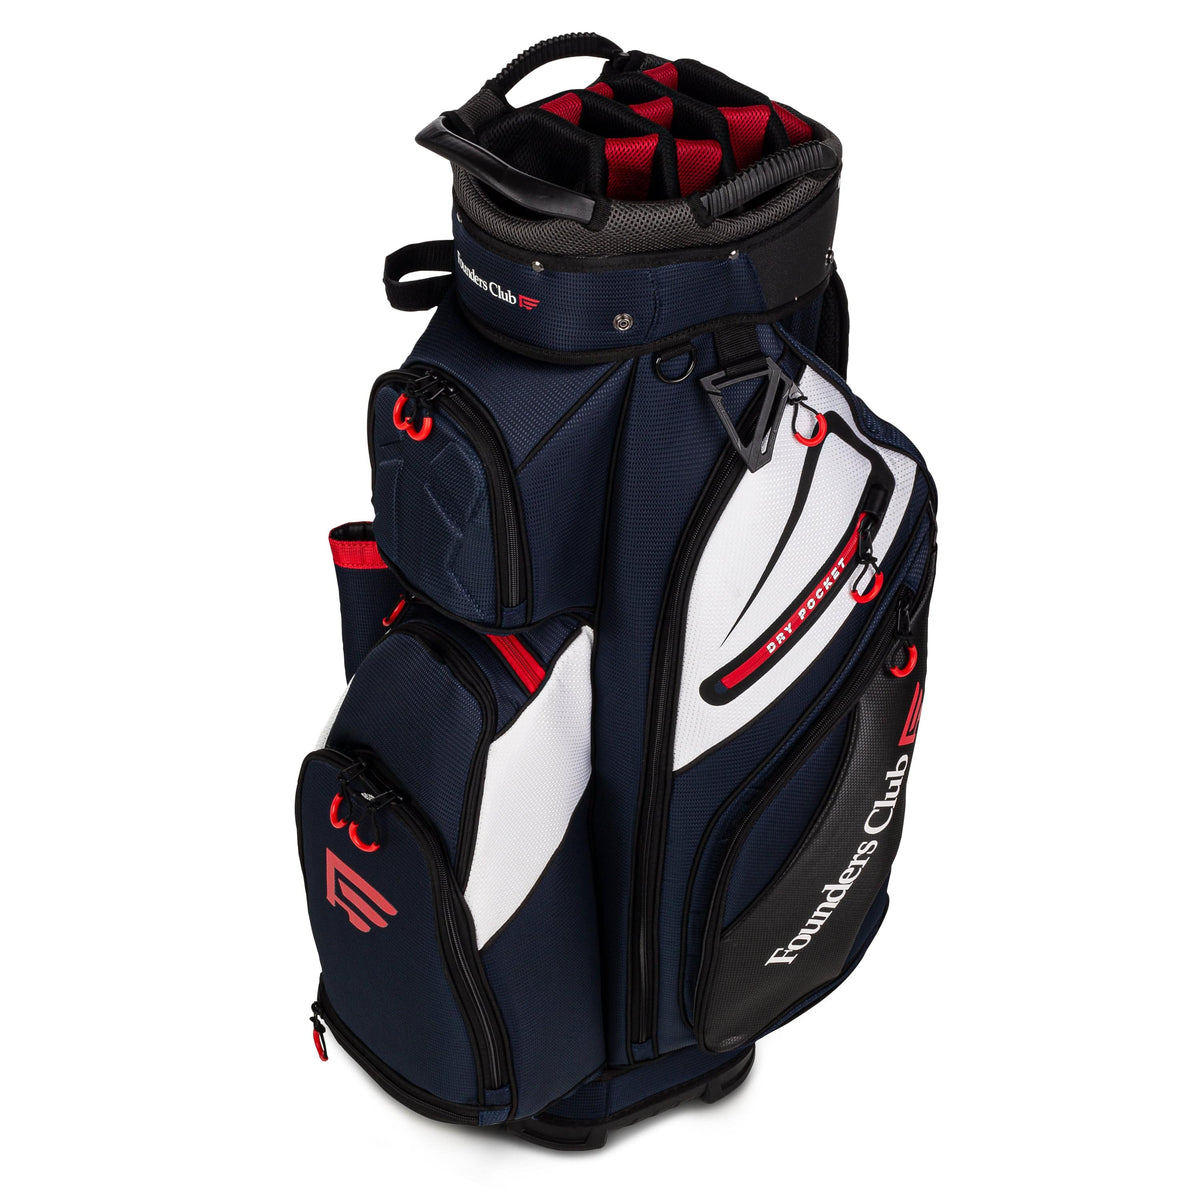 Founders Club Colorado 14 Way Full Length Divider Golf Cart Bag